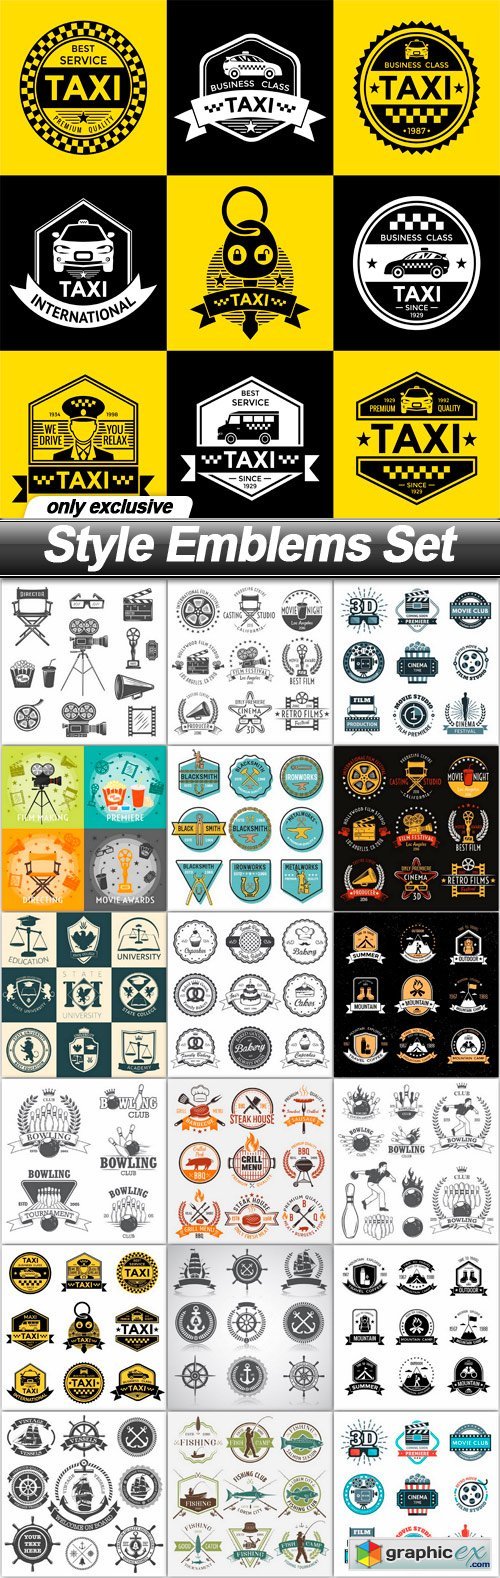 Style Emblems Set - 19 EPS